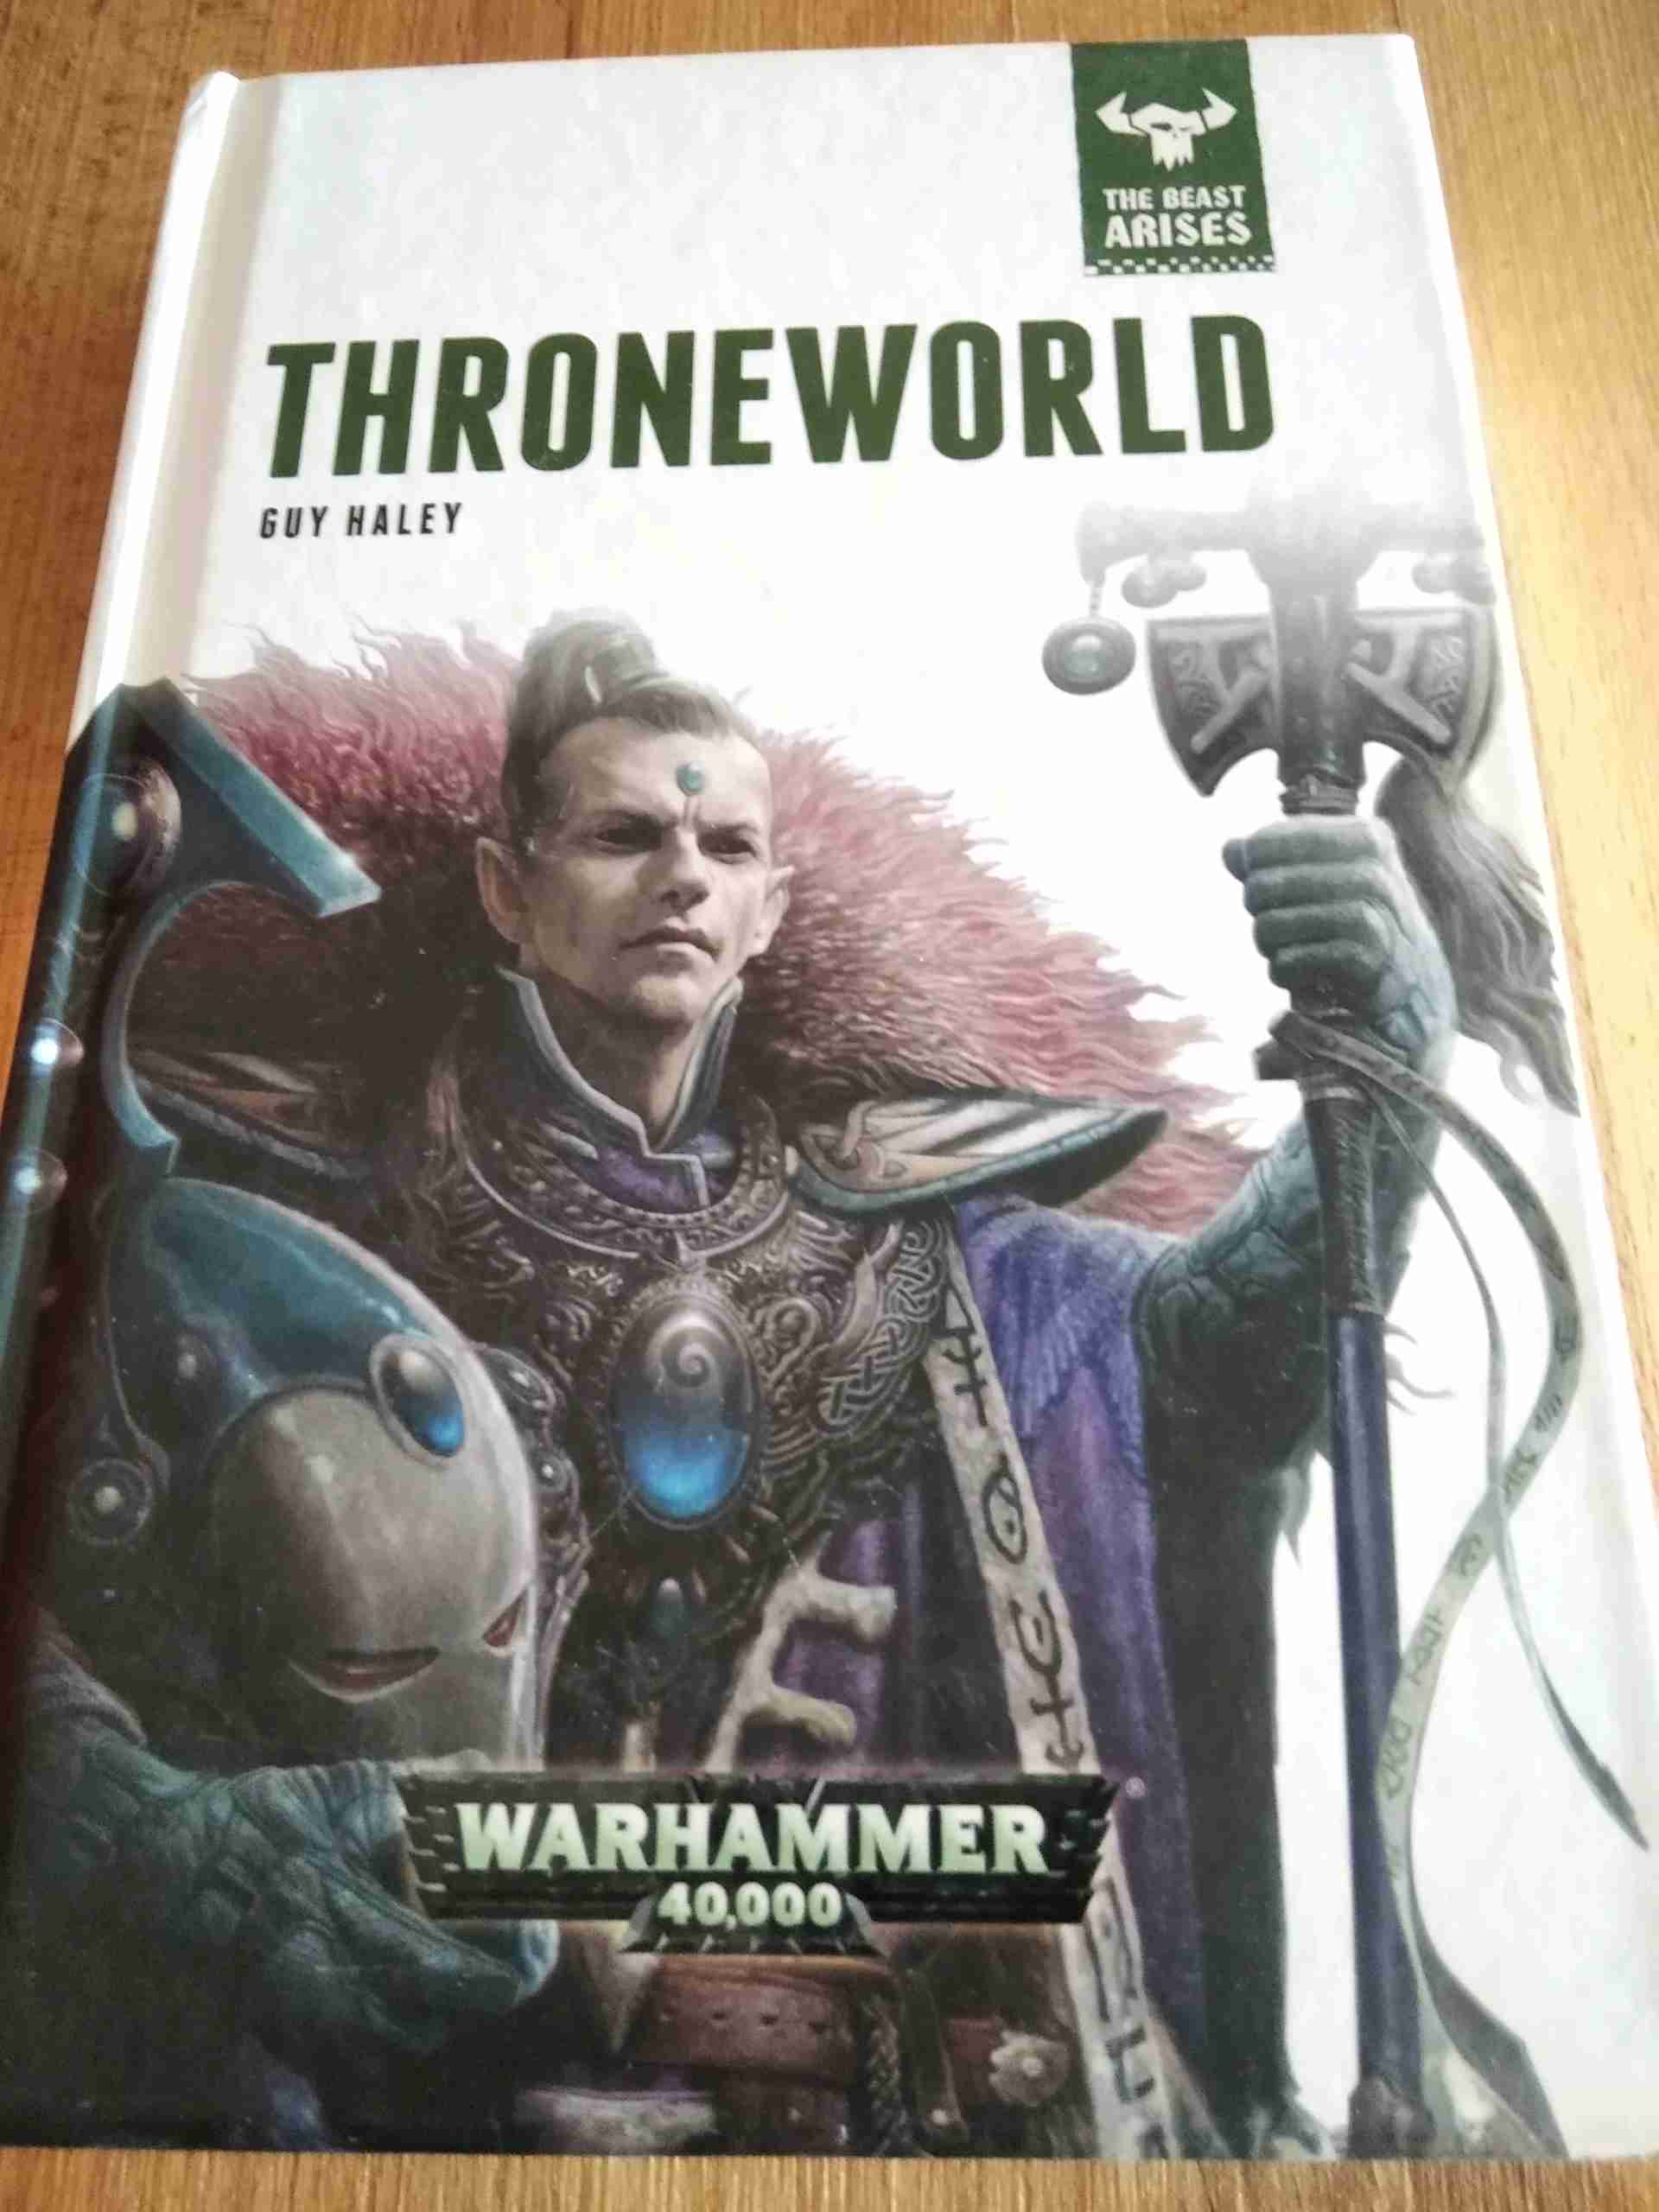 Throneworld